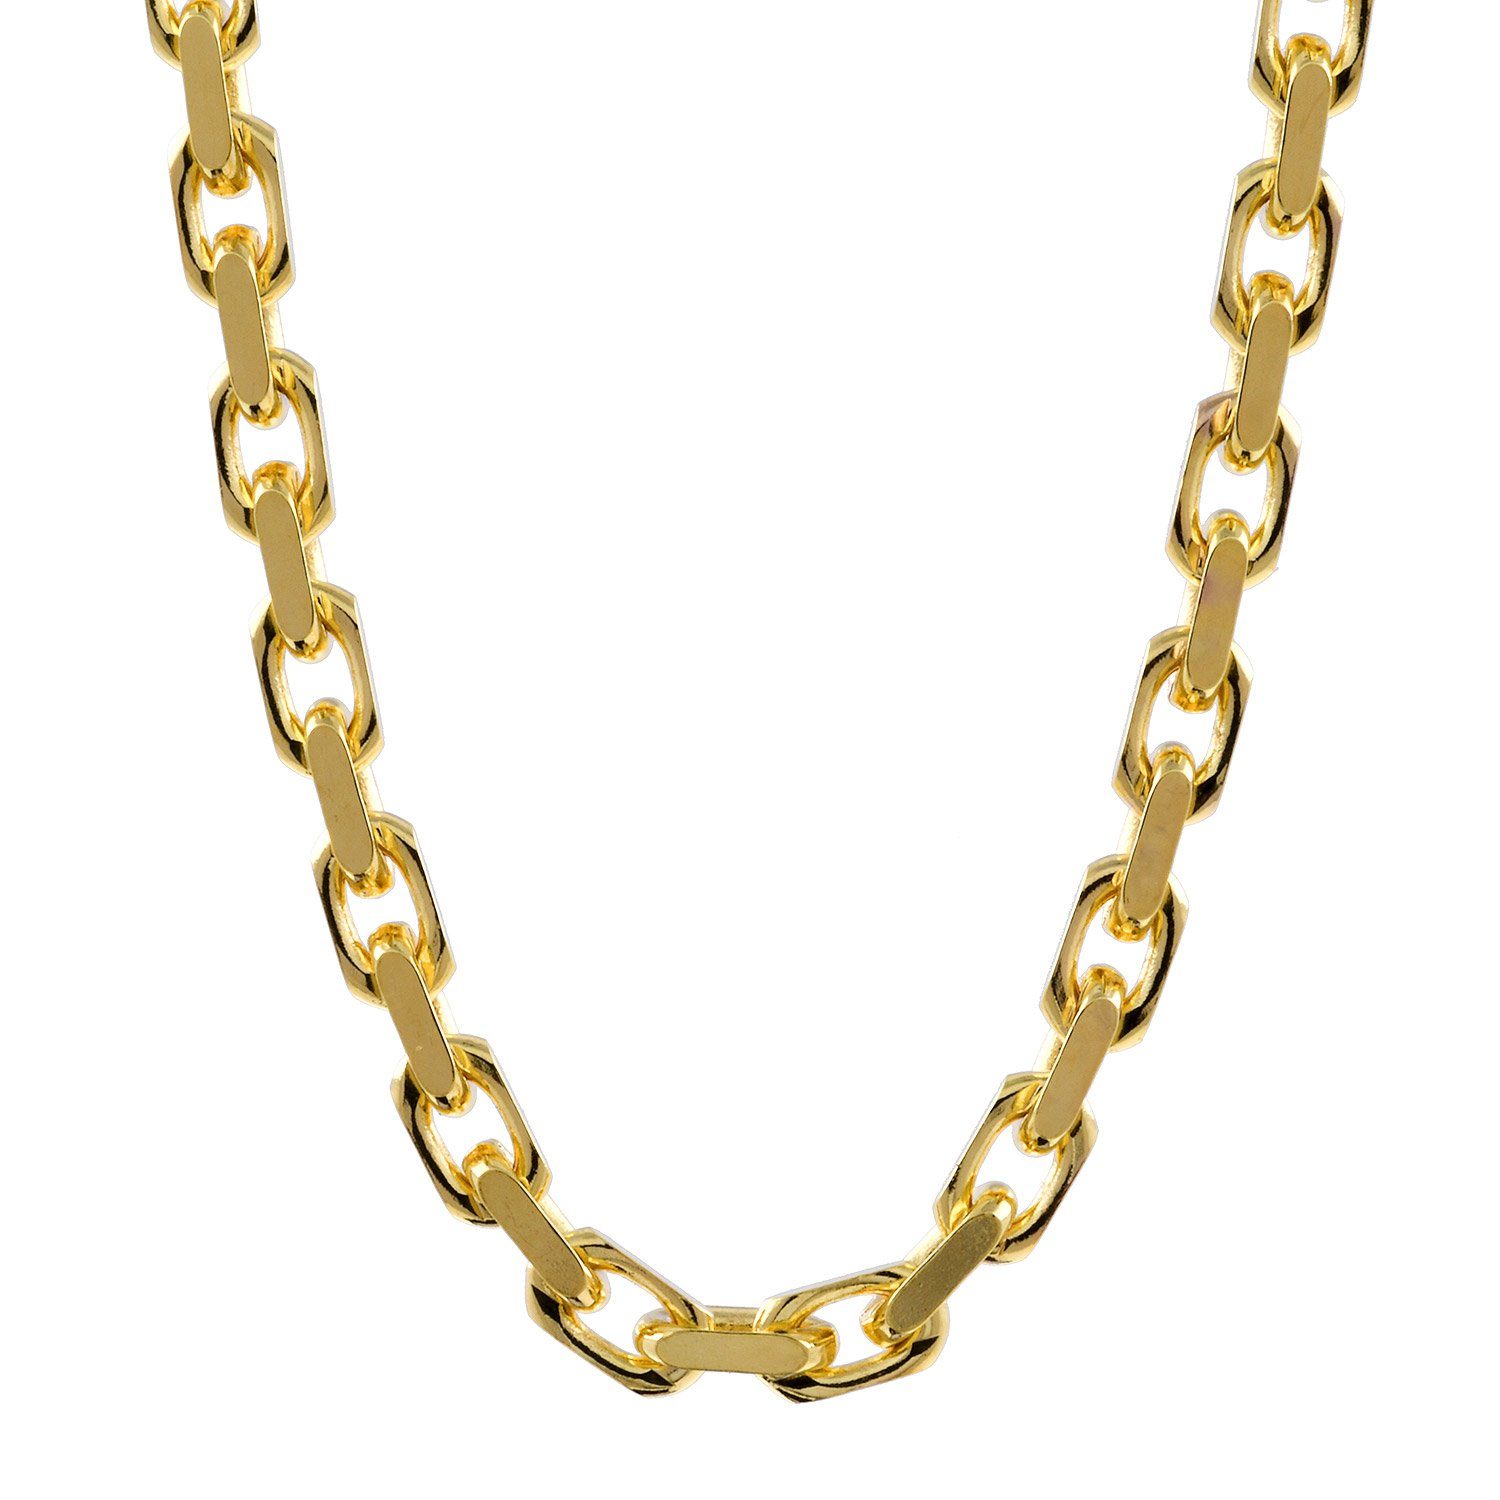 HOPLO Goldkette Ankerkette diamantiert 333 - 8 Karat Gold 1,8 mm Kettenlänge 50 cm (inkl. Schmuckbox), Made in Germany | Ketten ohne Anhänger